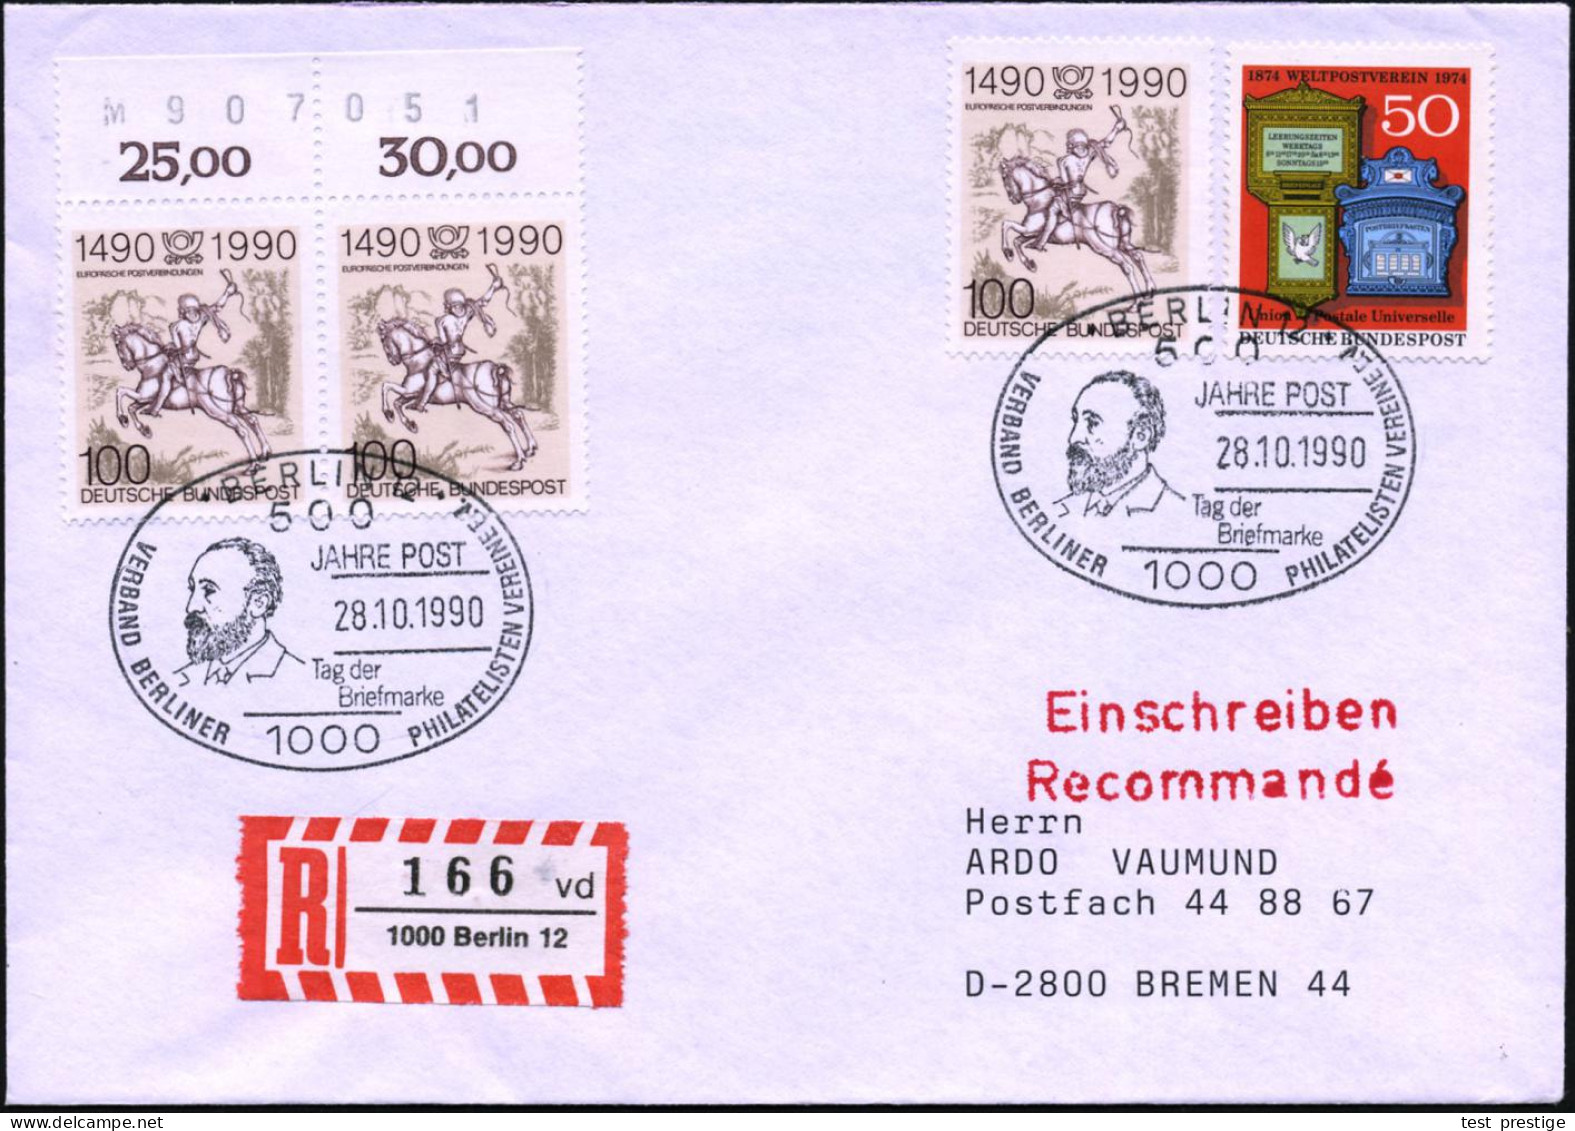 1000 BERLIN 12/ 500 JAHRE POST/ Tag Der/ Briefmarke.. 1990 (28.10.) SSt = Heinr. V.Stephan 2x Auf 50 Pf. UPU + 3x 100 Pf - UPU (Union Postale Universelle)